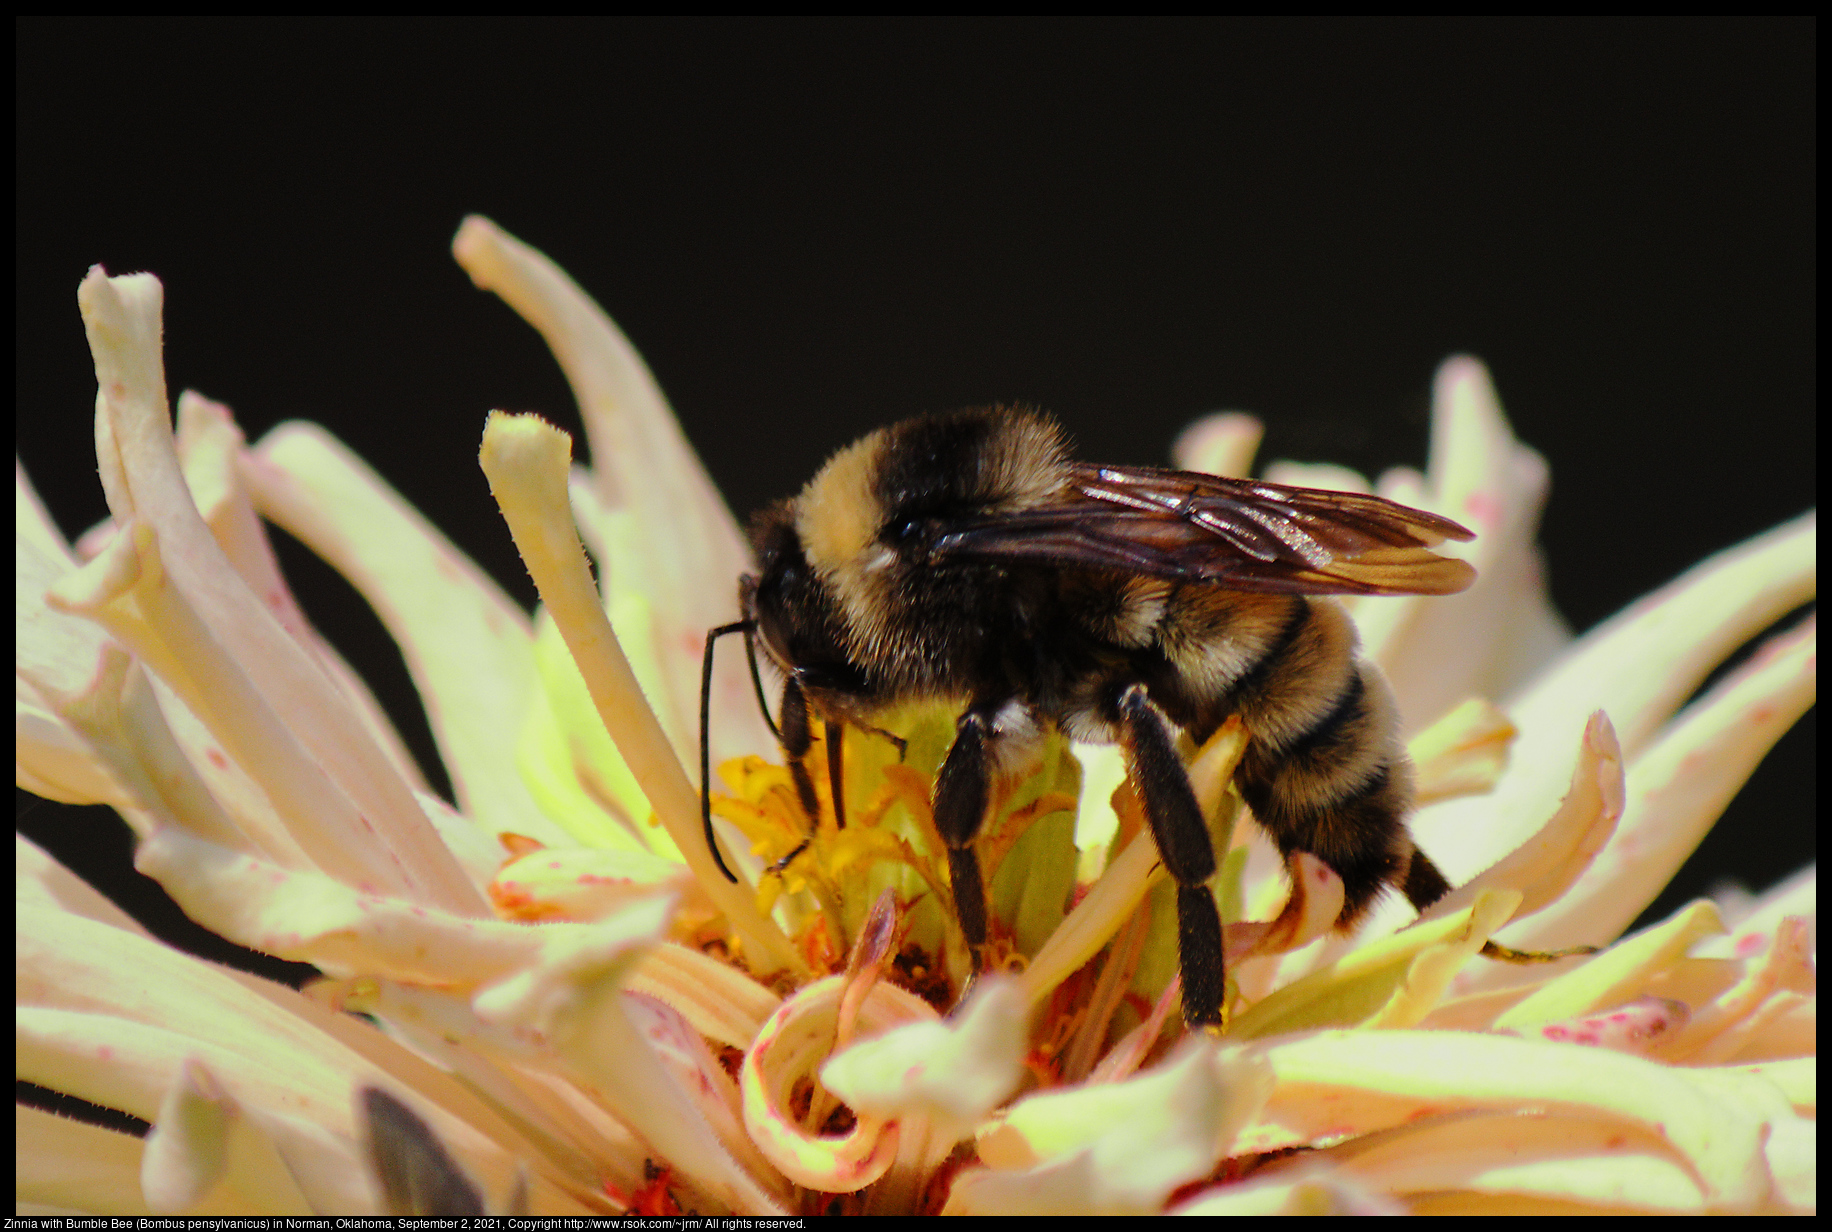 Zinnia with Bumble Bee (Bombus pensylvanicus) in Norman, Oklahoma, September 2, 2021